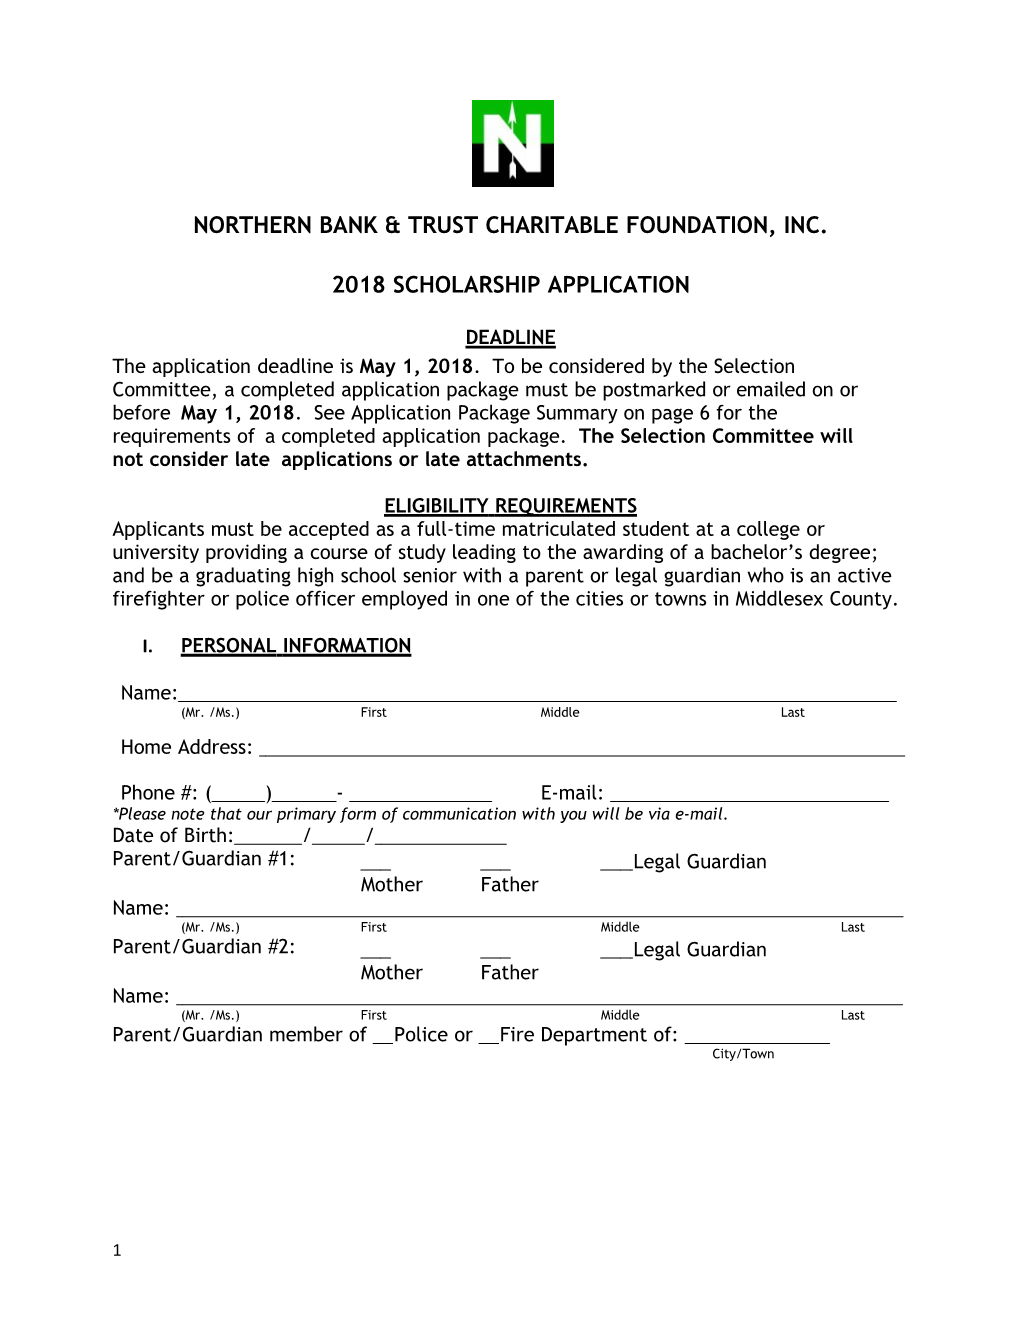 Northern Bank & Trust Charitable Foundation, Inc